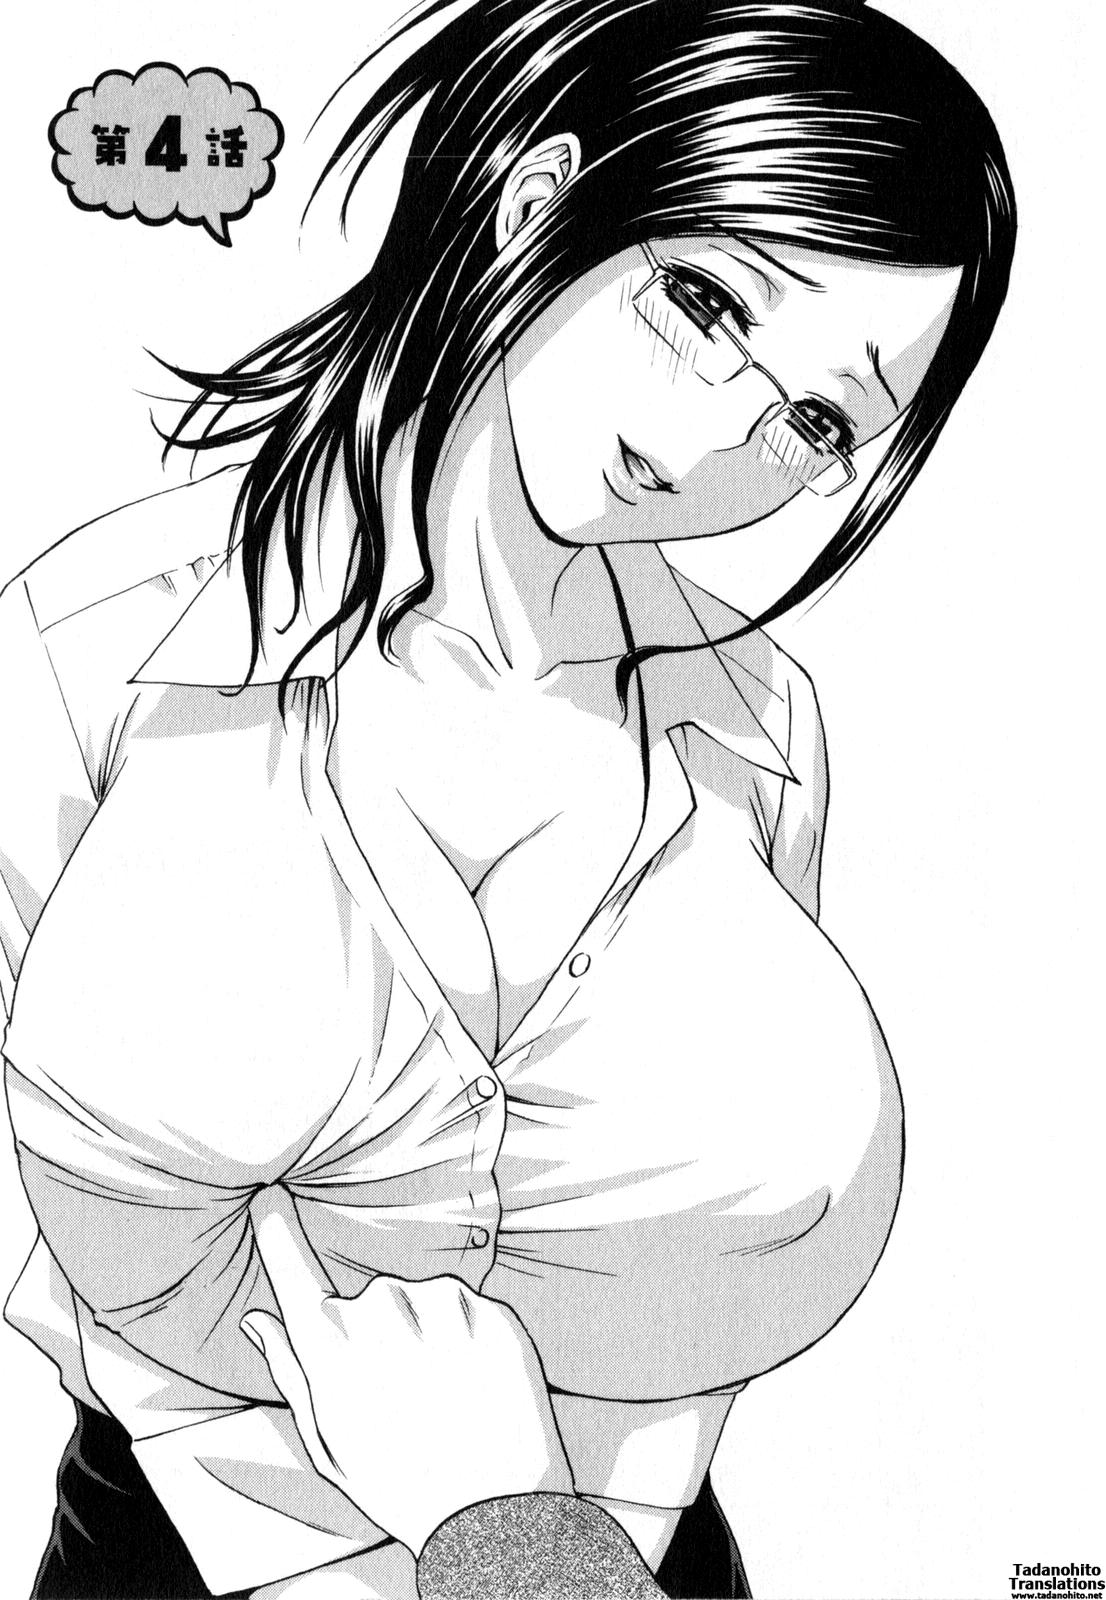 [Hidemaru] Life with Married Women Just Like a Manga 2 - Ch. 1-5 [English] {Tadanohito} 67